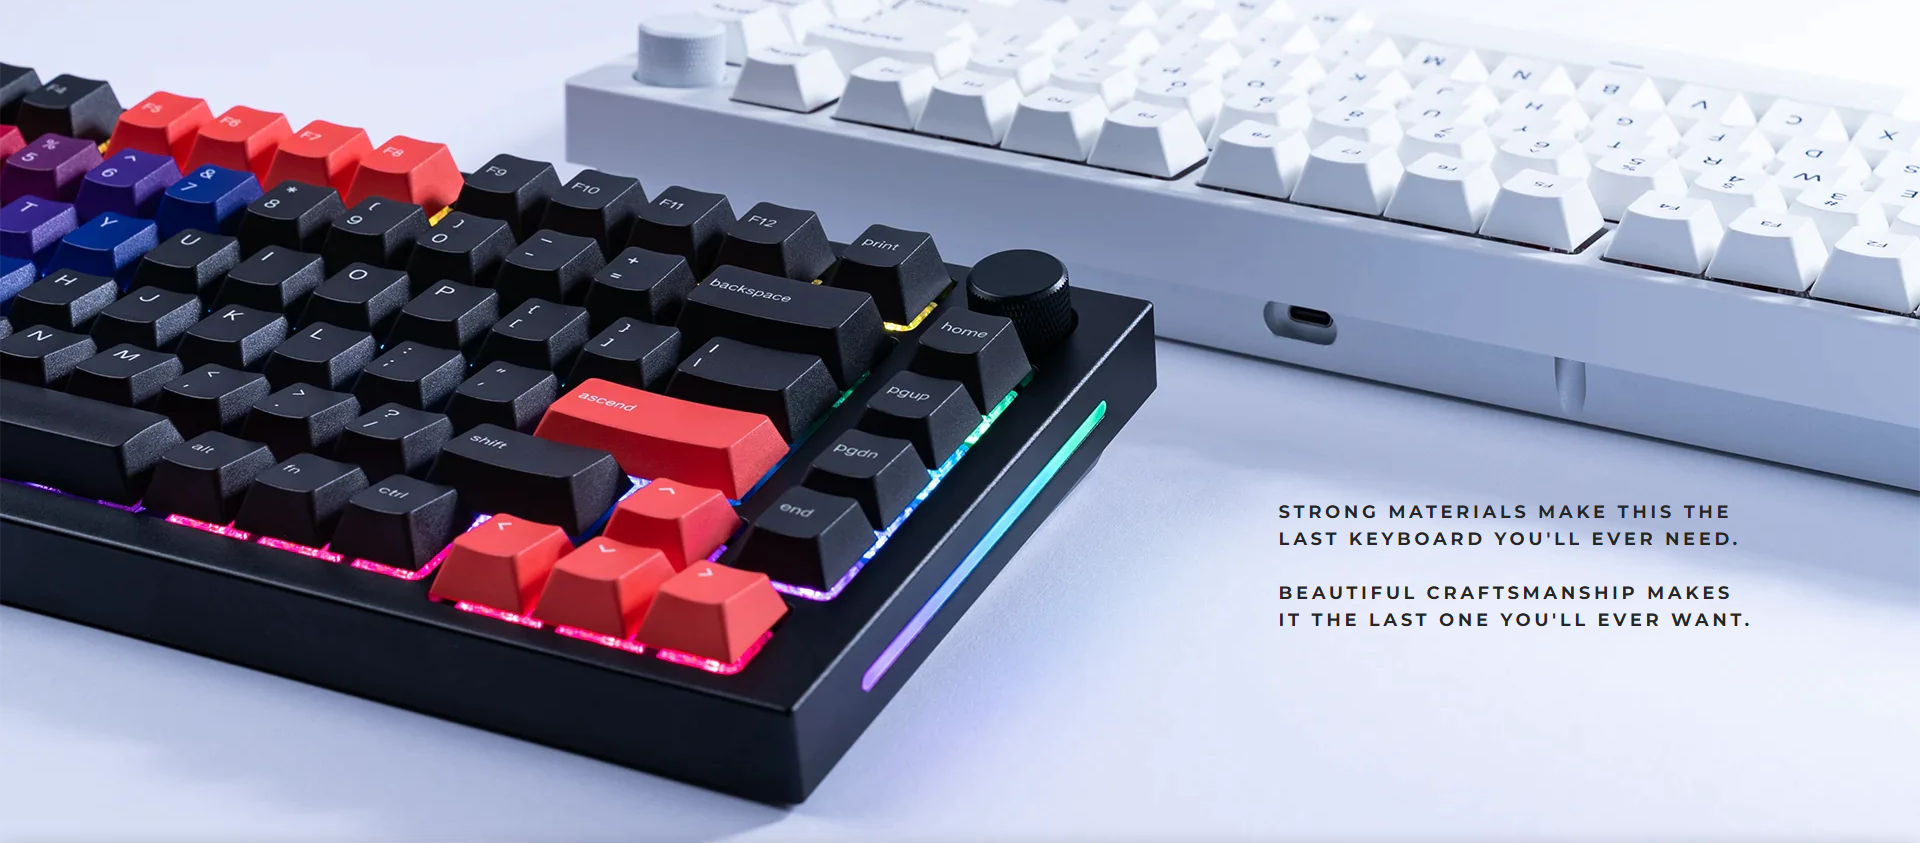 A large marketing image providing additional information about the product Glorious GMMK Pro 75% Mechanical Keyboard - Black Slate (Barebones) - Additional alt info not provided